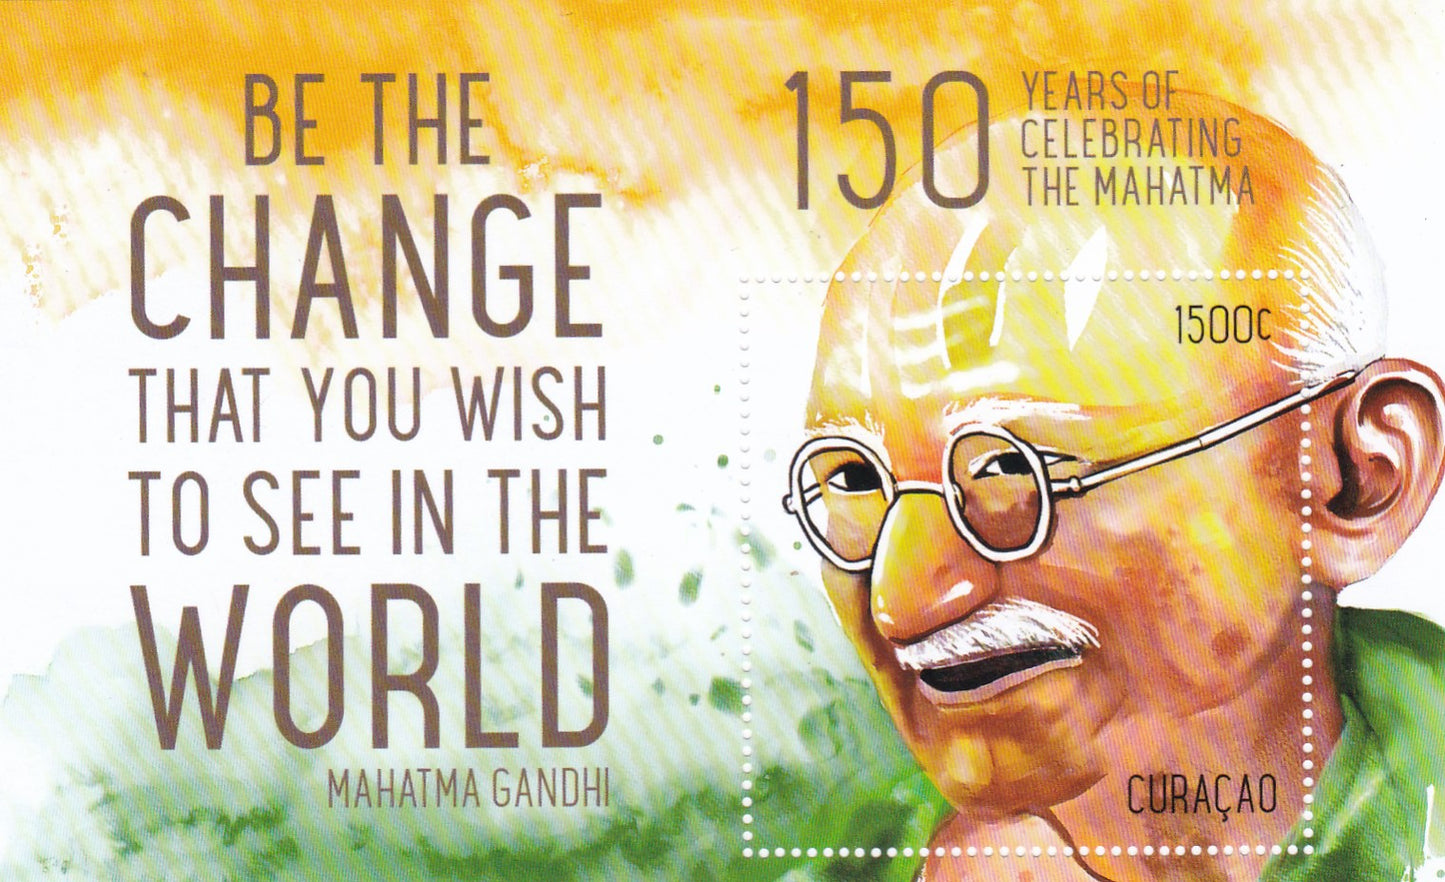 Curacao-150th Anniversary of Mahatma Gandhi